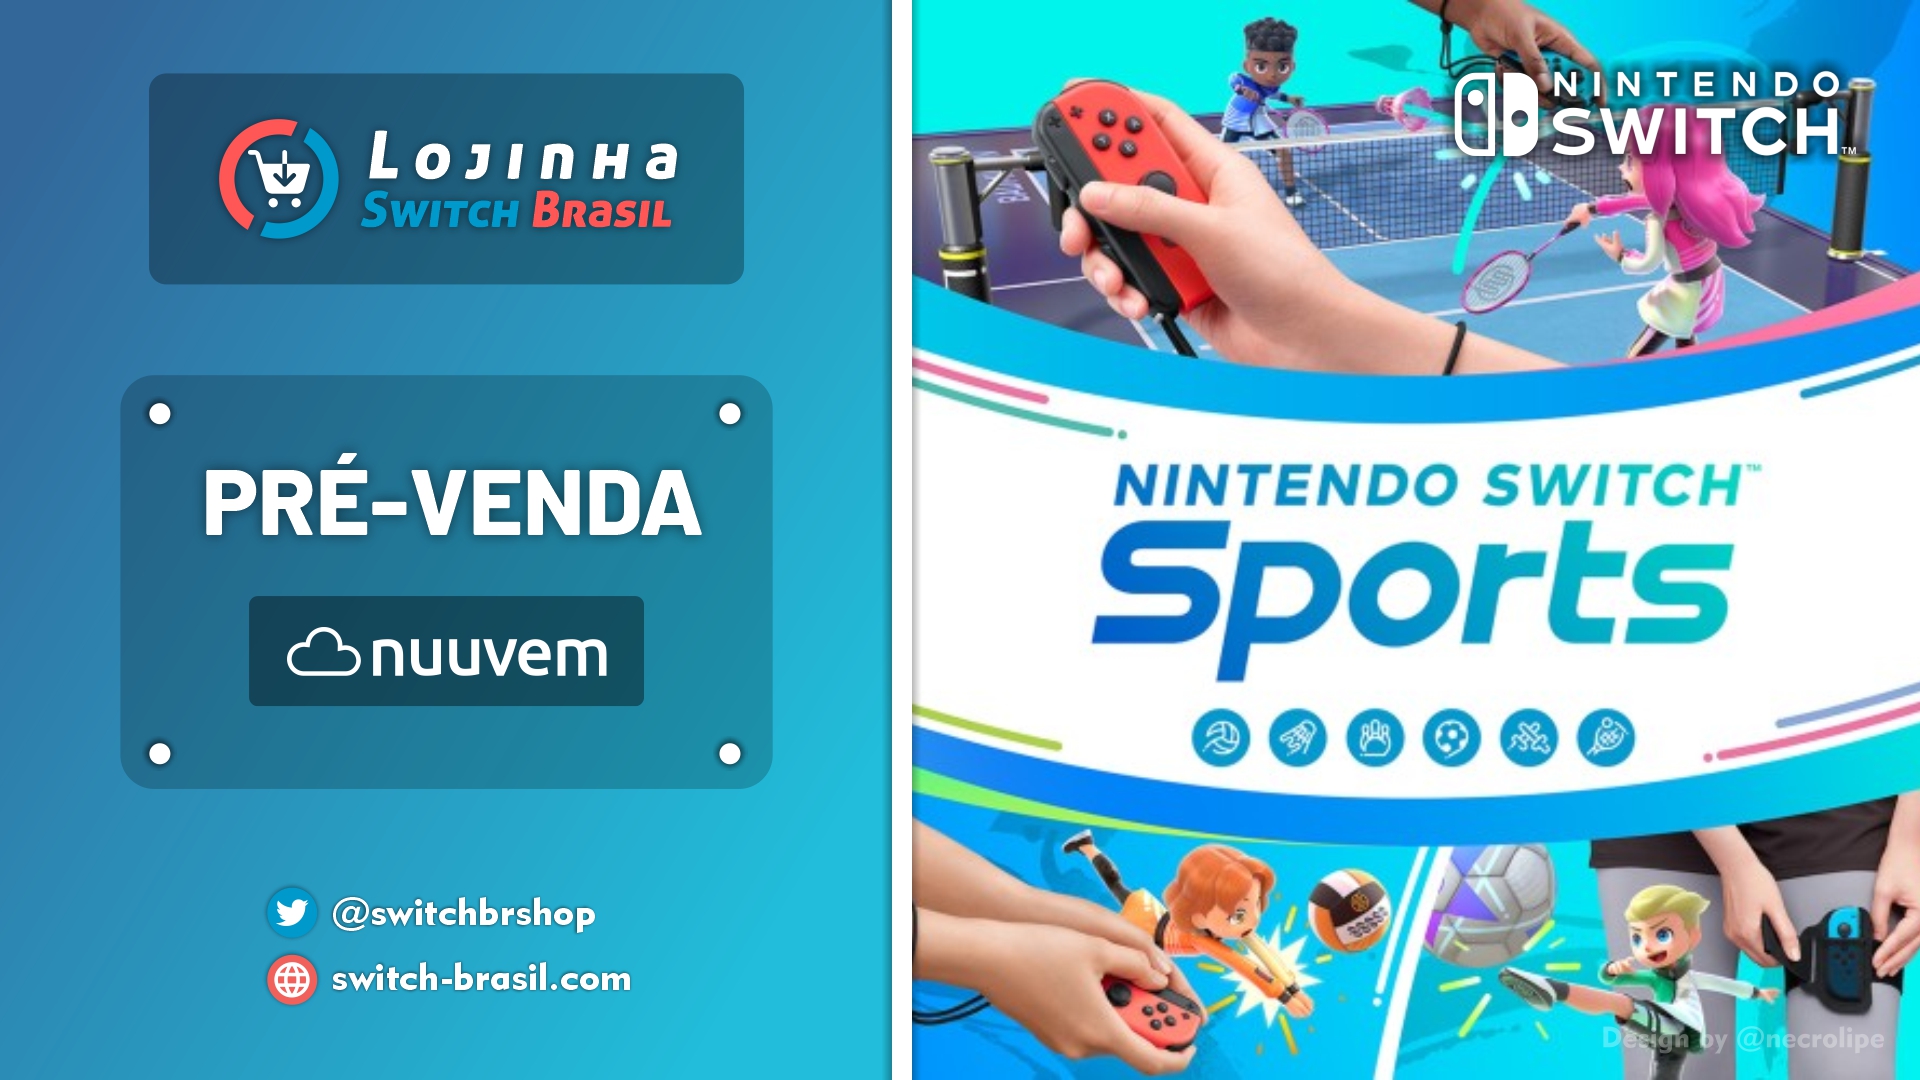 Ofertas Universo Nintendo (@ShopUNintendo) / X